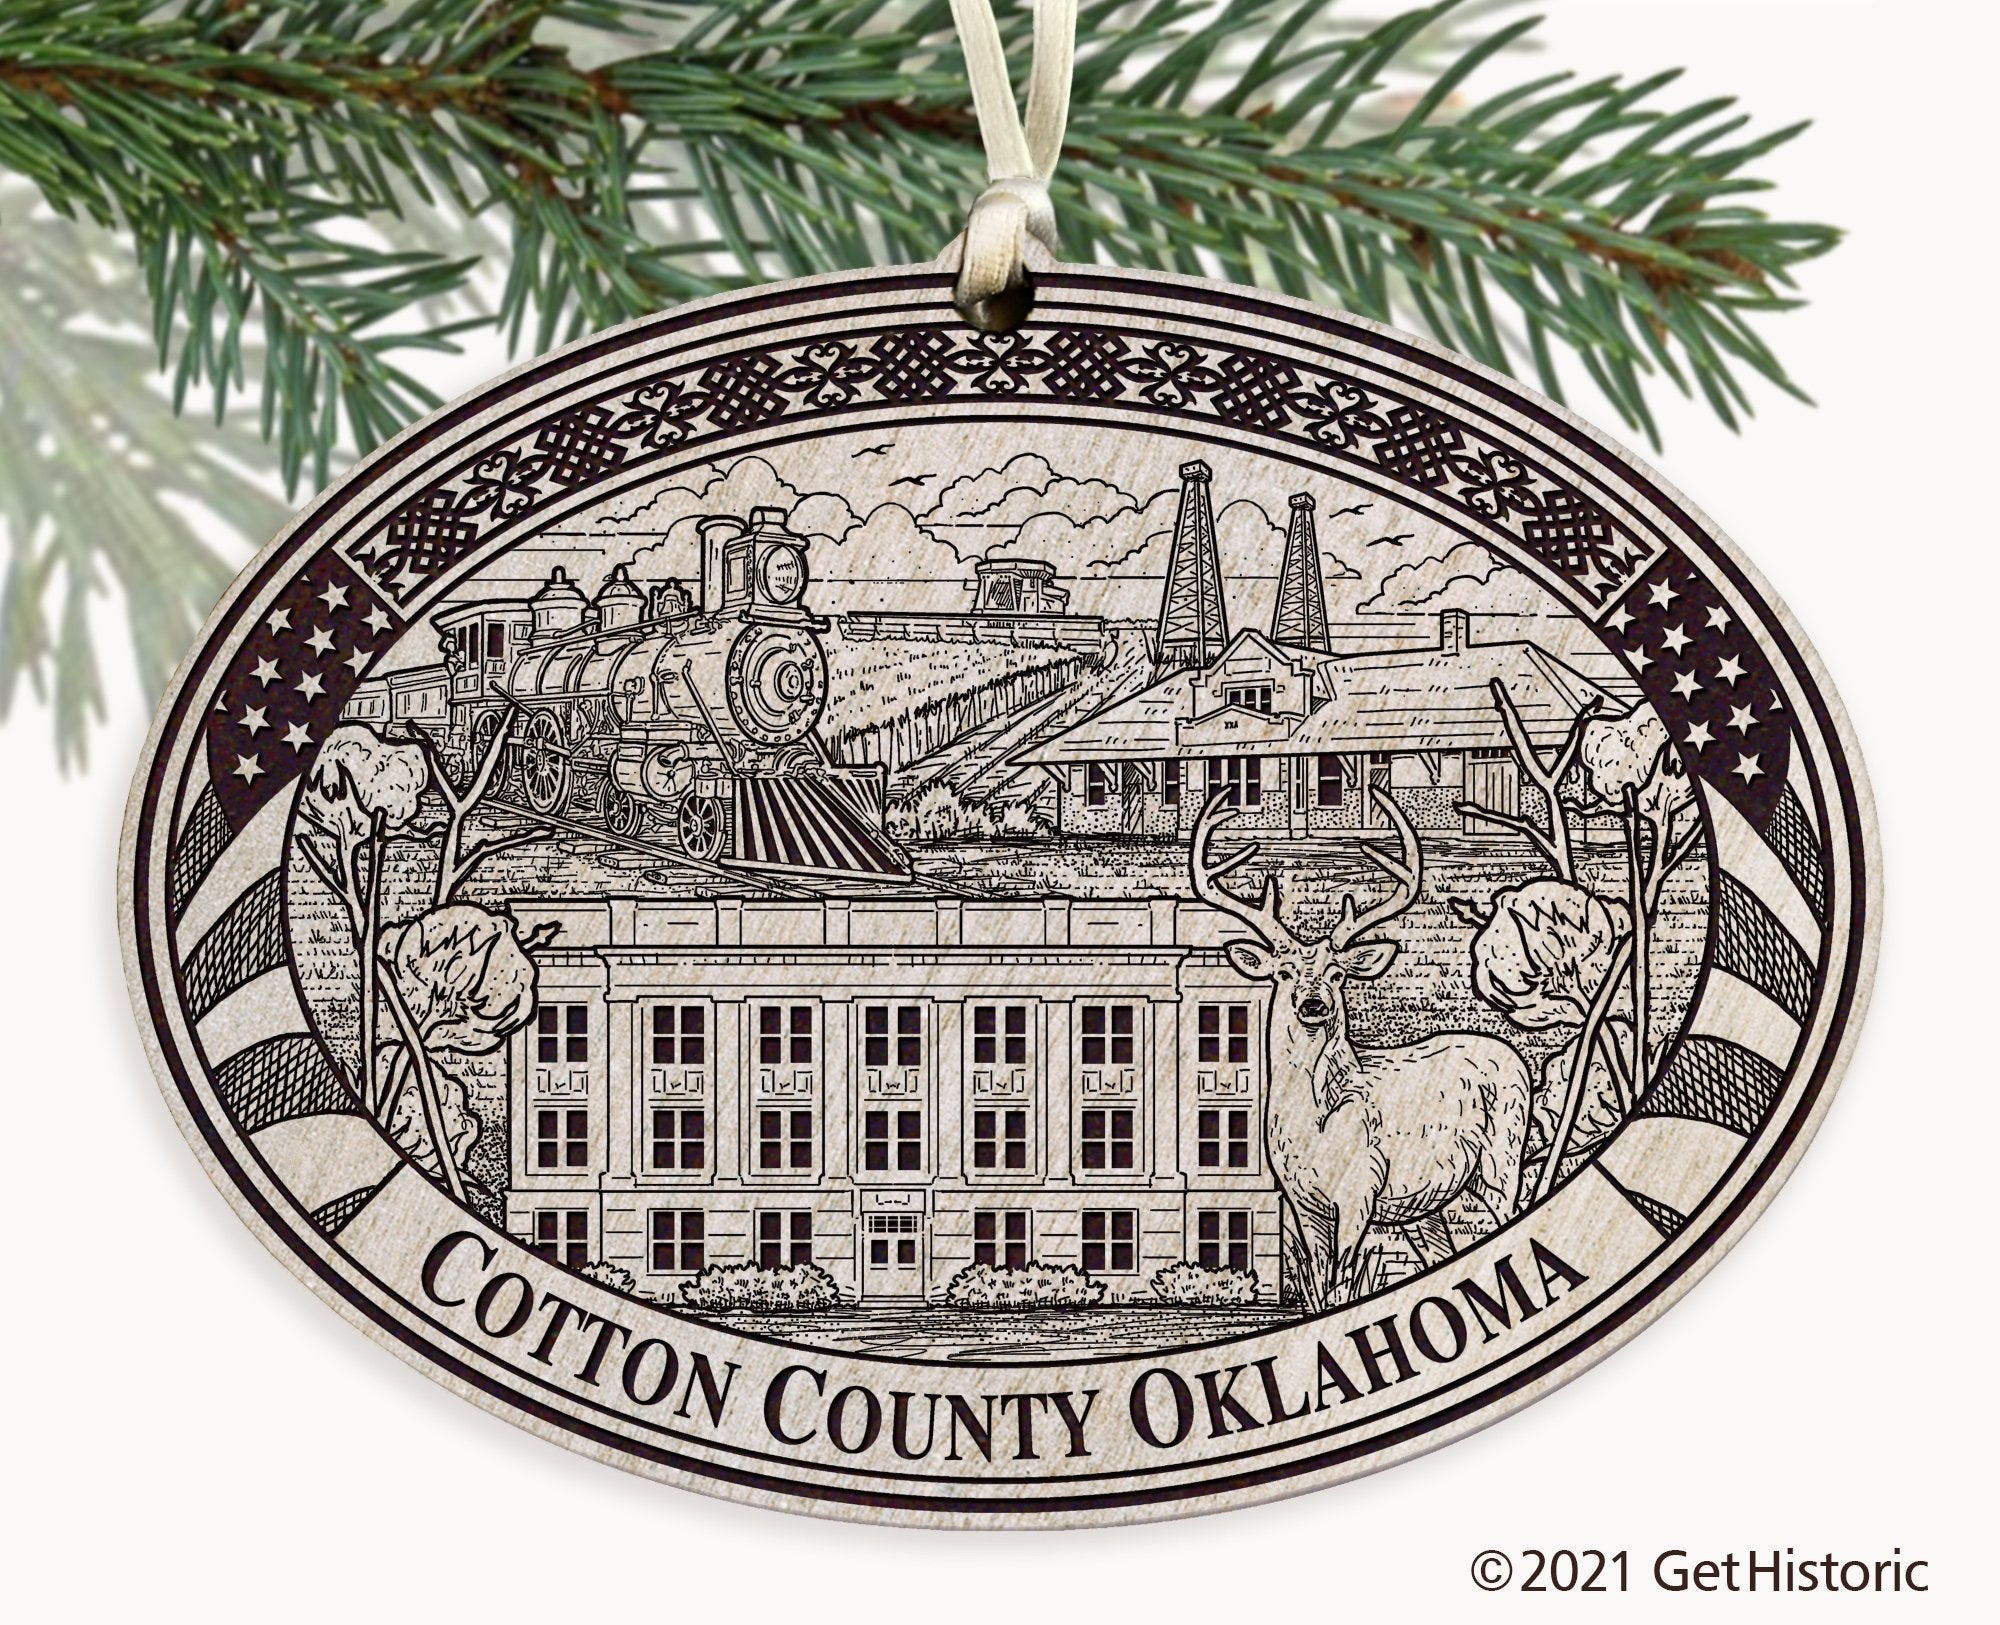 Cotton County Oklahoma Engraved Ornament